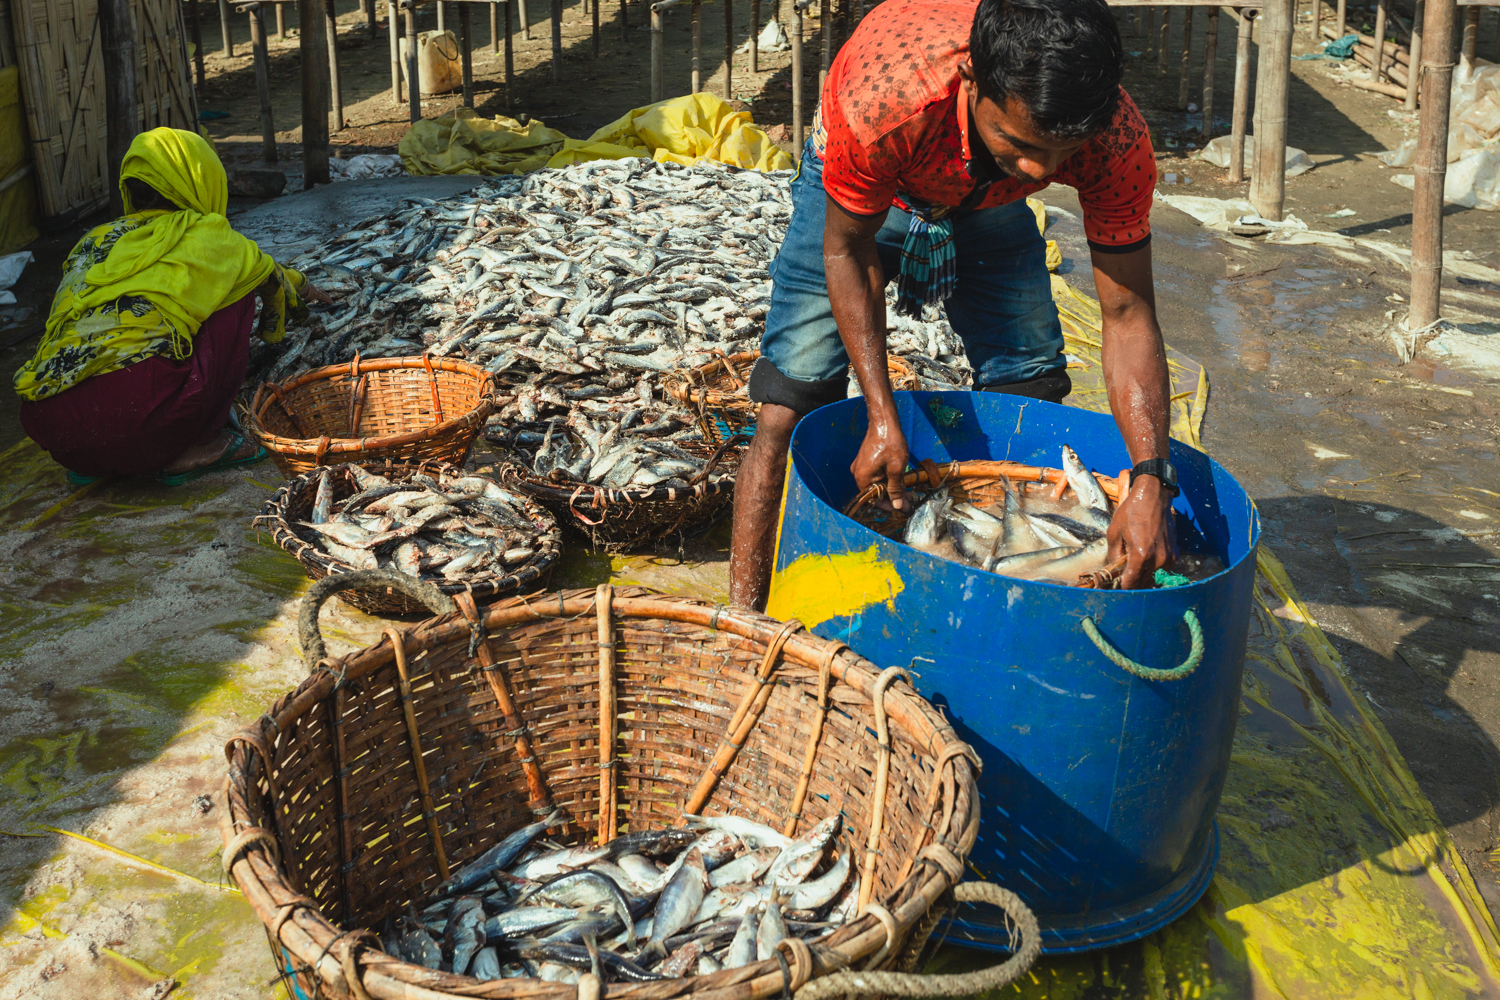 Cleaning basket of fish at Dried Fish Village processing plant in Dhaka - Bangladesh.